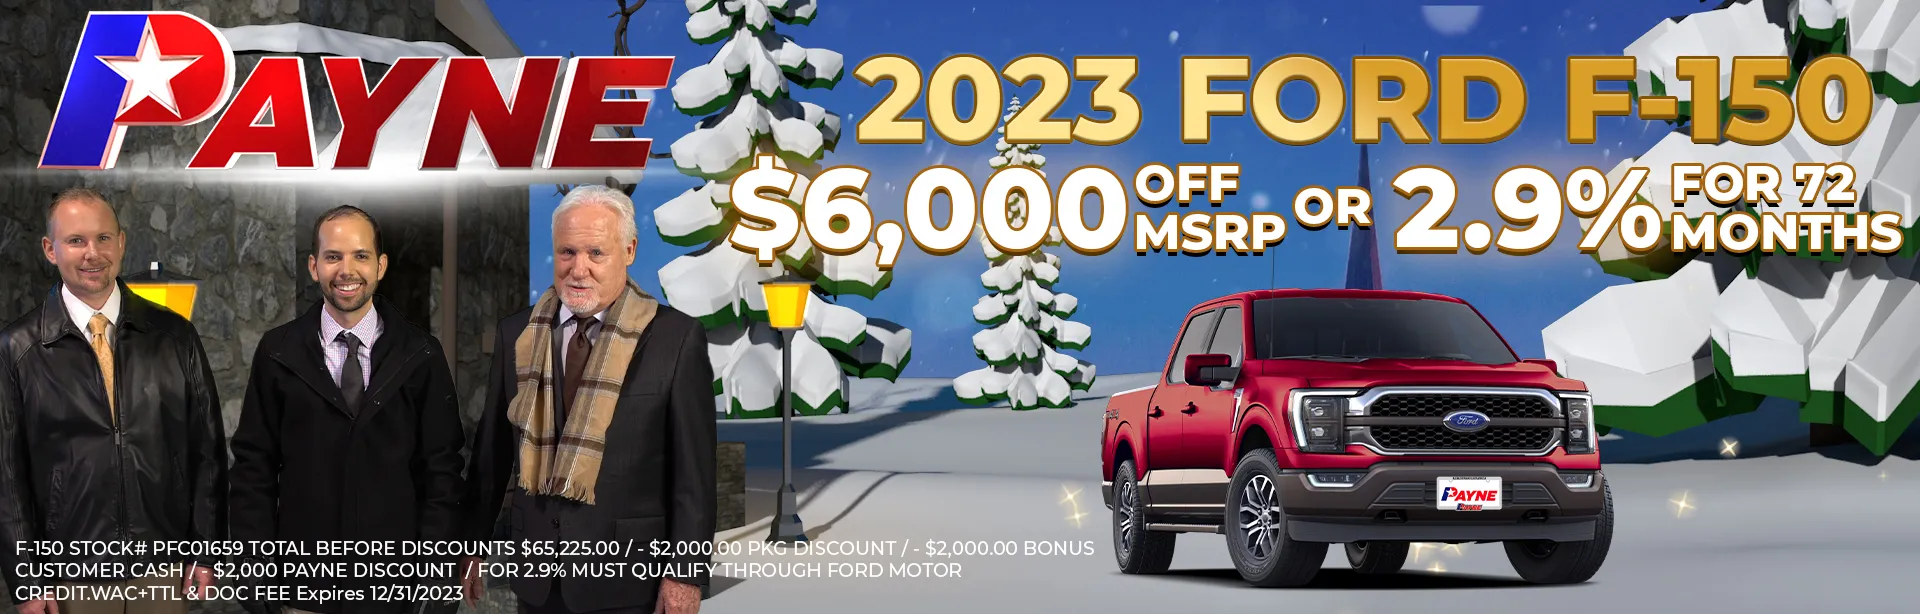 2023 Ford F-150 $6,000 OFF MSRP | Payne Rio Grande City Ford | Rio Grande City, Texas